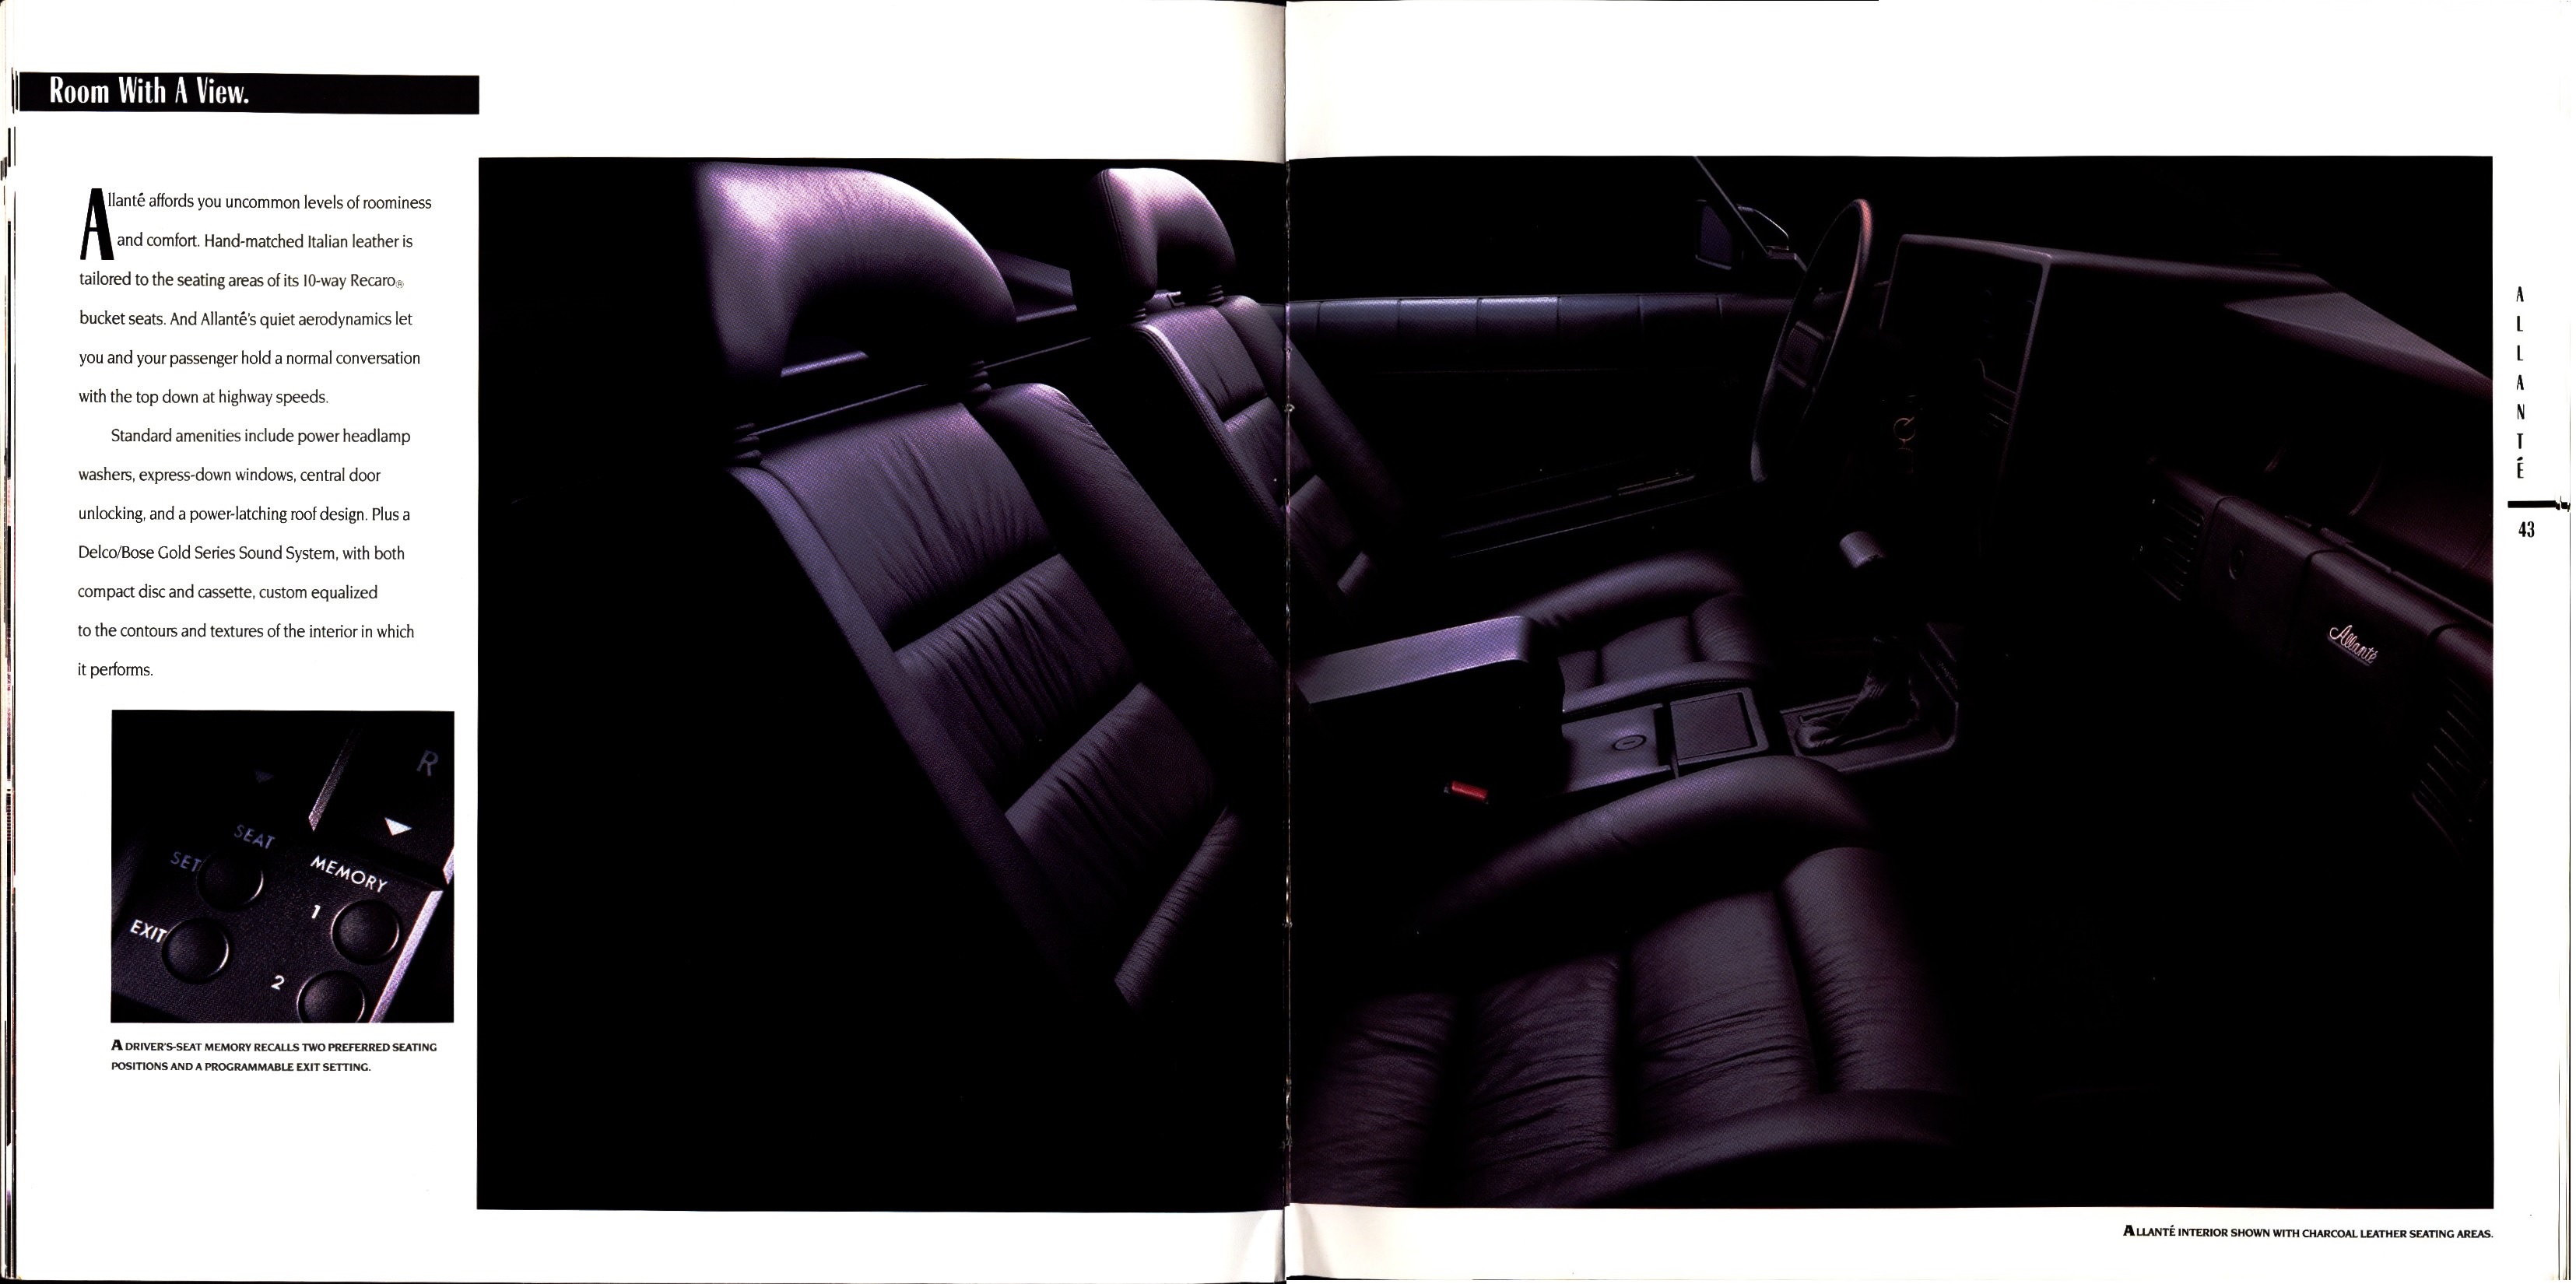 1992 Cadillac Full Line Prestige Brochure 42-43